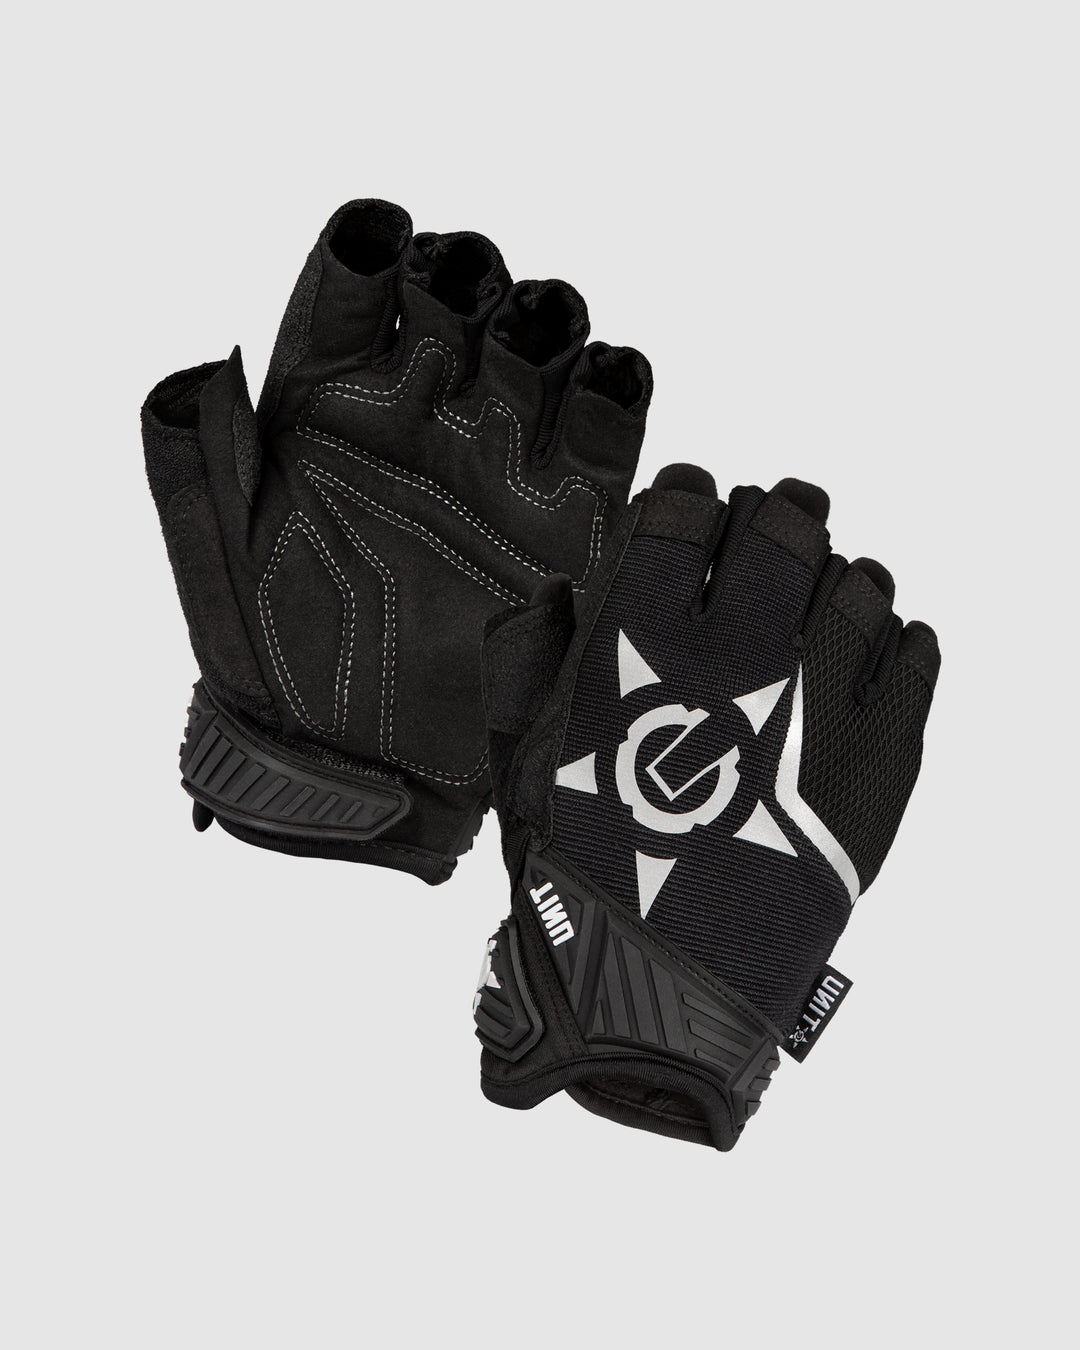 UNIT Flex Guard Fingerless Work Wear Gloves